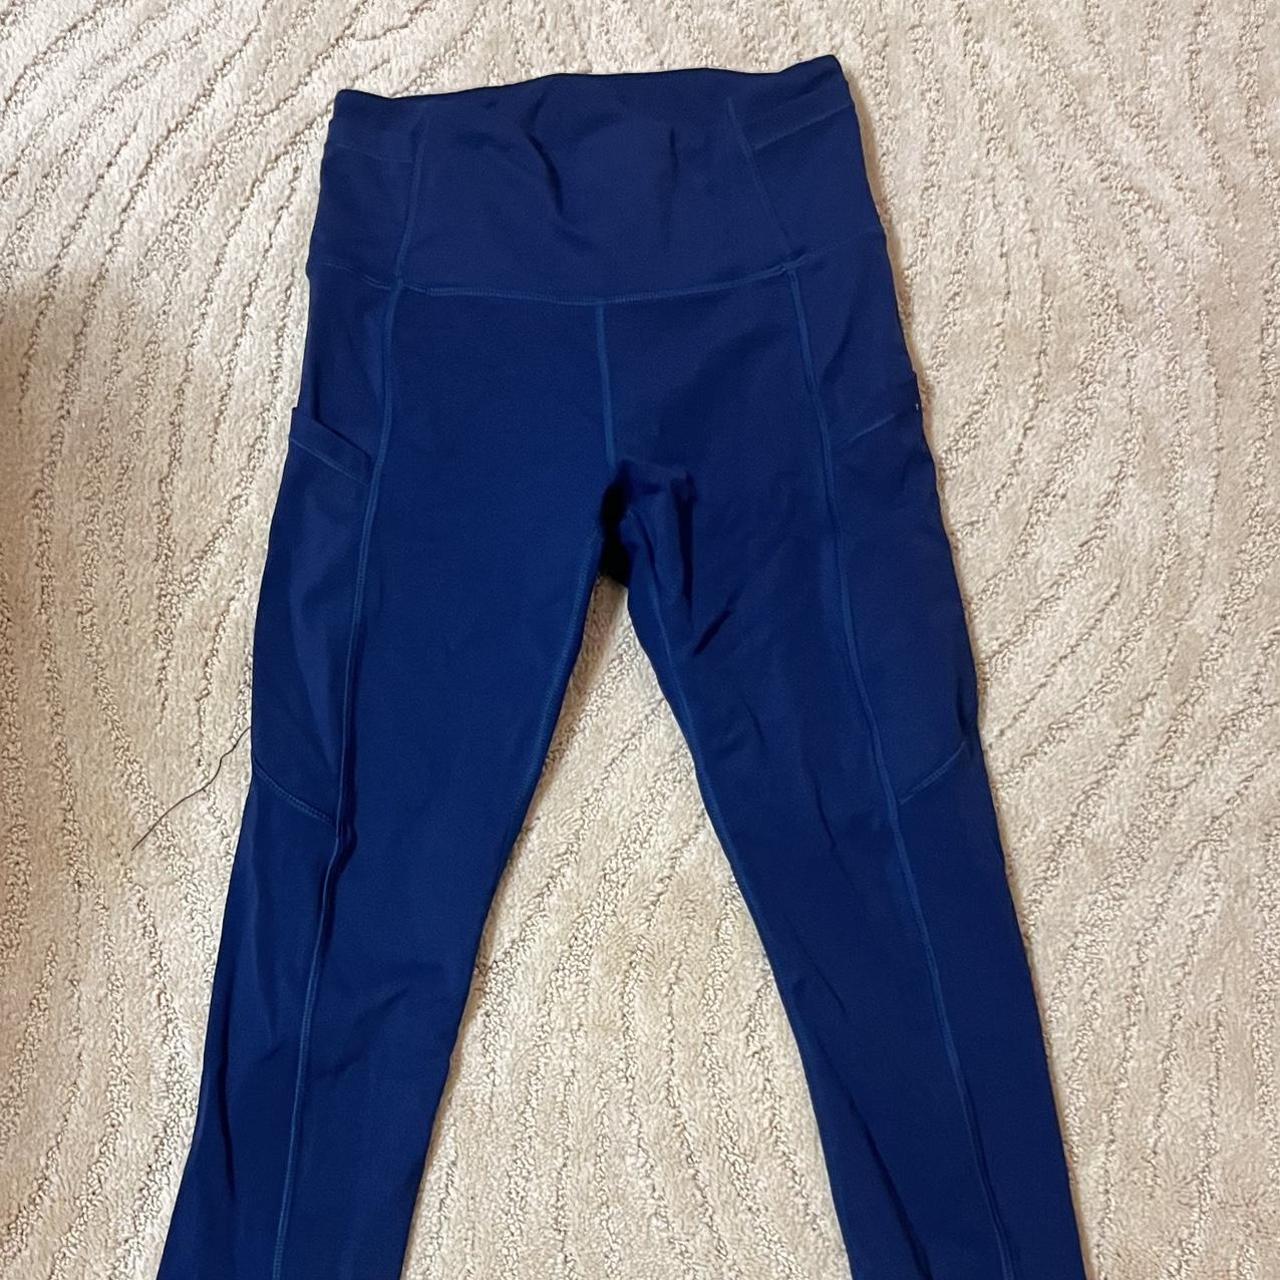 Lululemon navy blue leggings with pockets and mesh - Depop